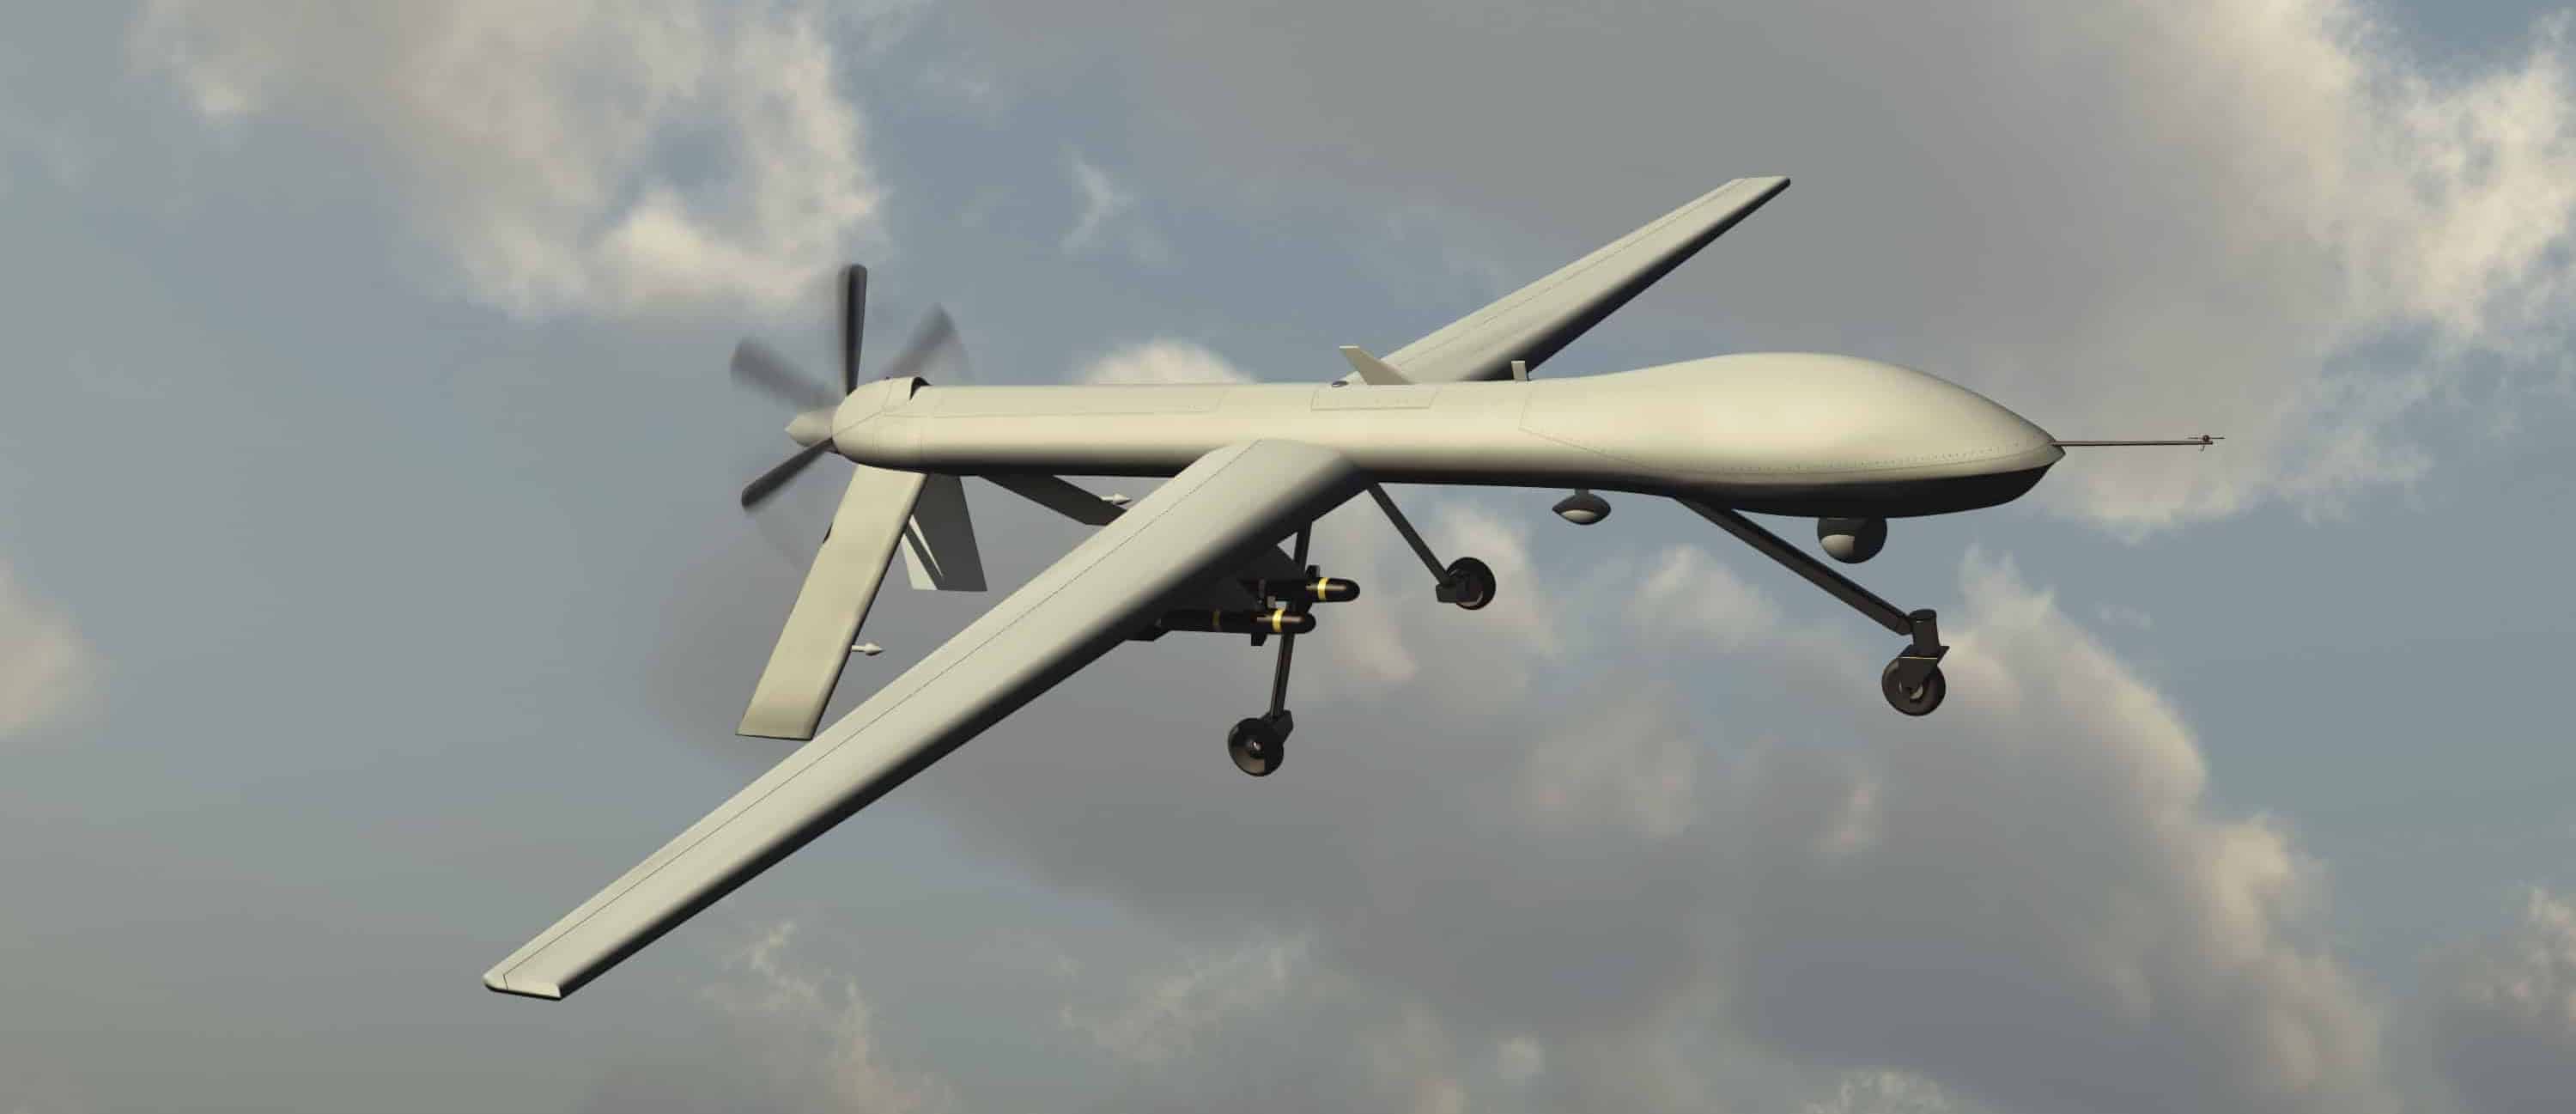 RaimaDMA036 Unmanned Aircrafts Military UAV Pic2 e1562864891611 الطائرات بدون طيار ما هي وكيف تعمل؟ مجلة نقطة العلمية